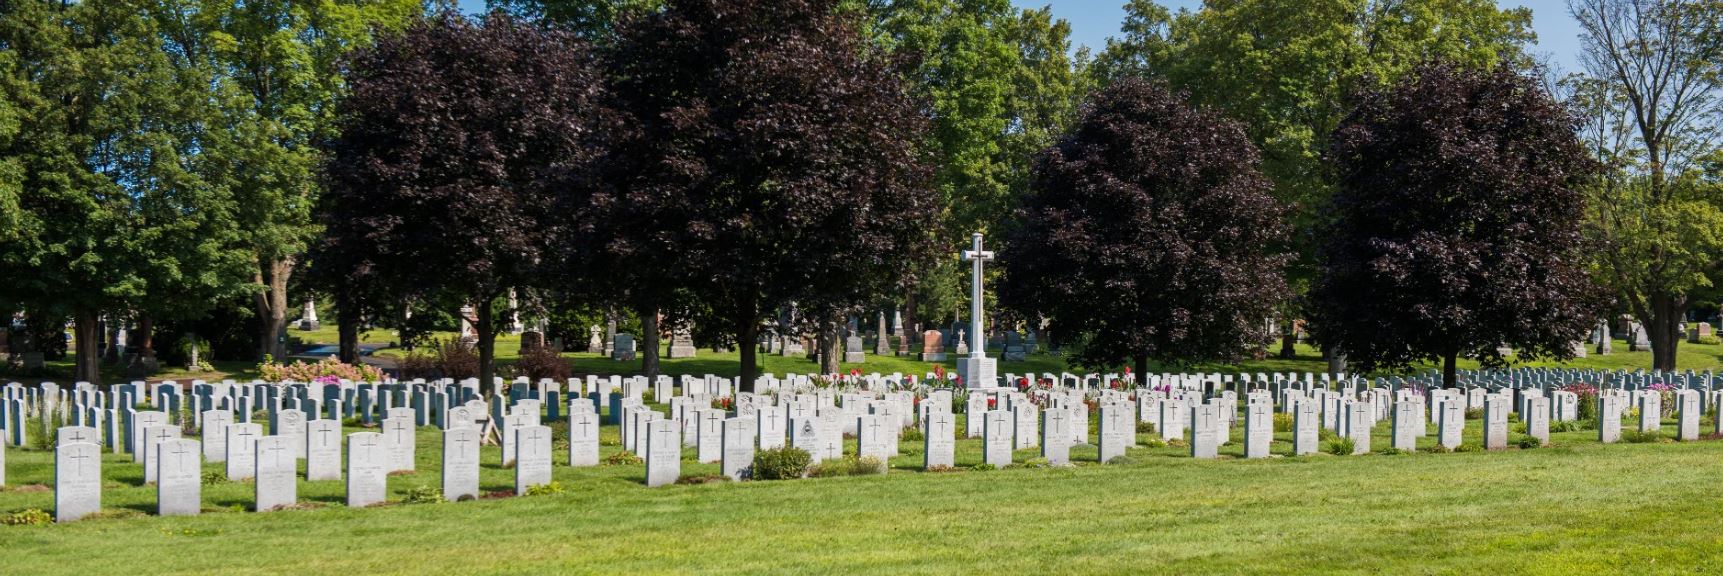 Veterans Section - Cross of Sacrifice